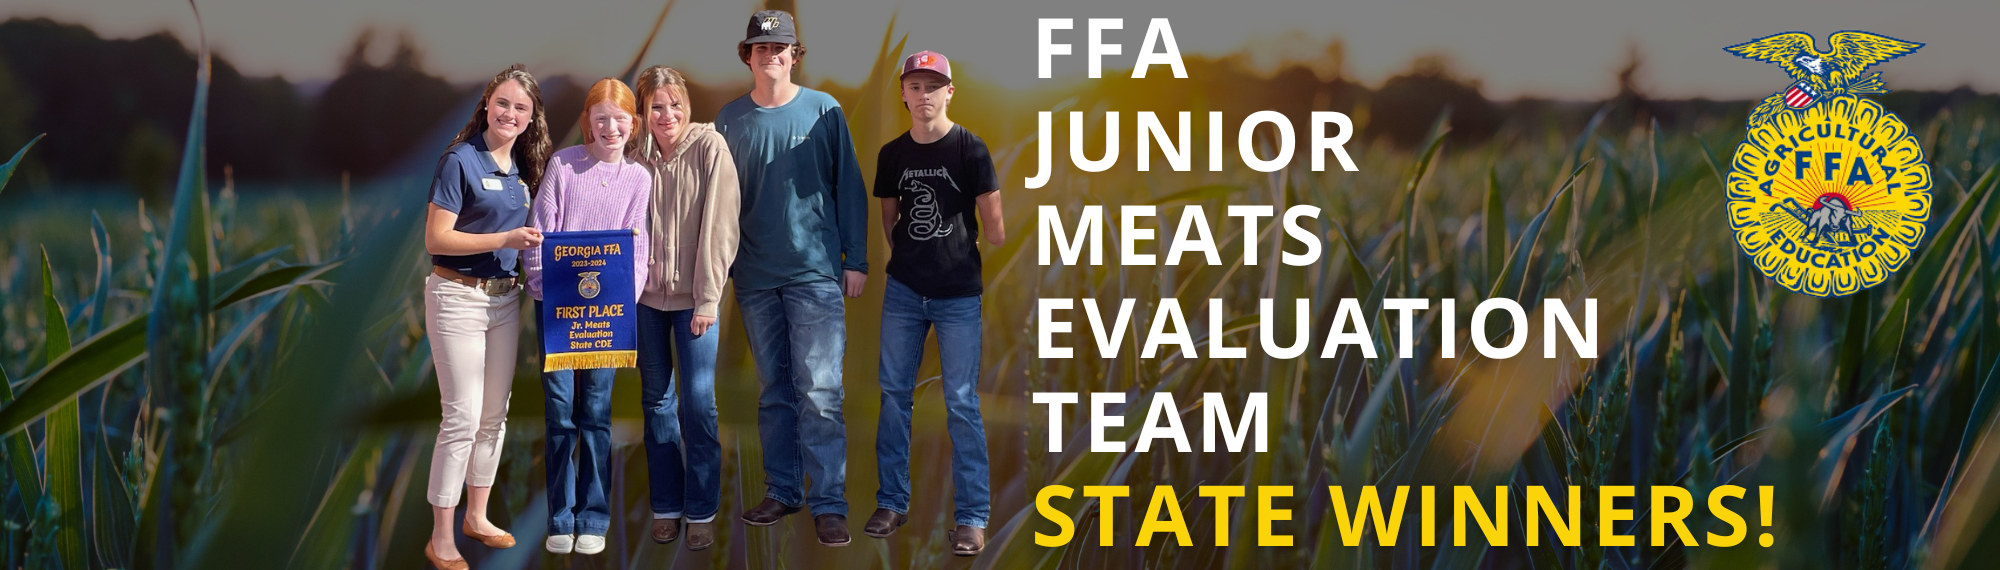 FFA Jr Meat Evaluation Team State Winners